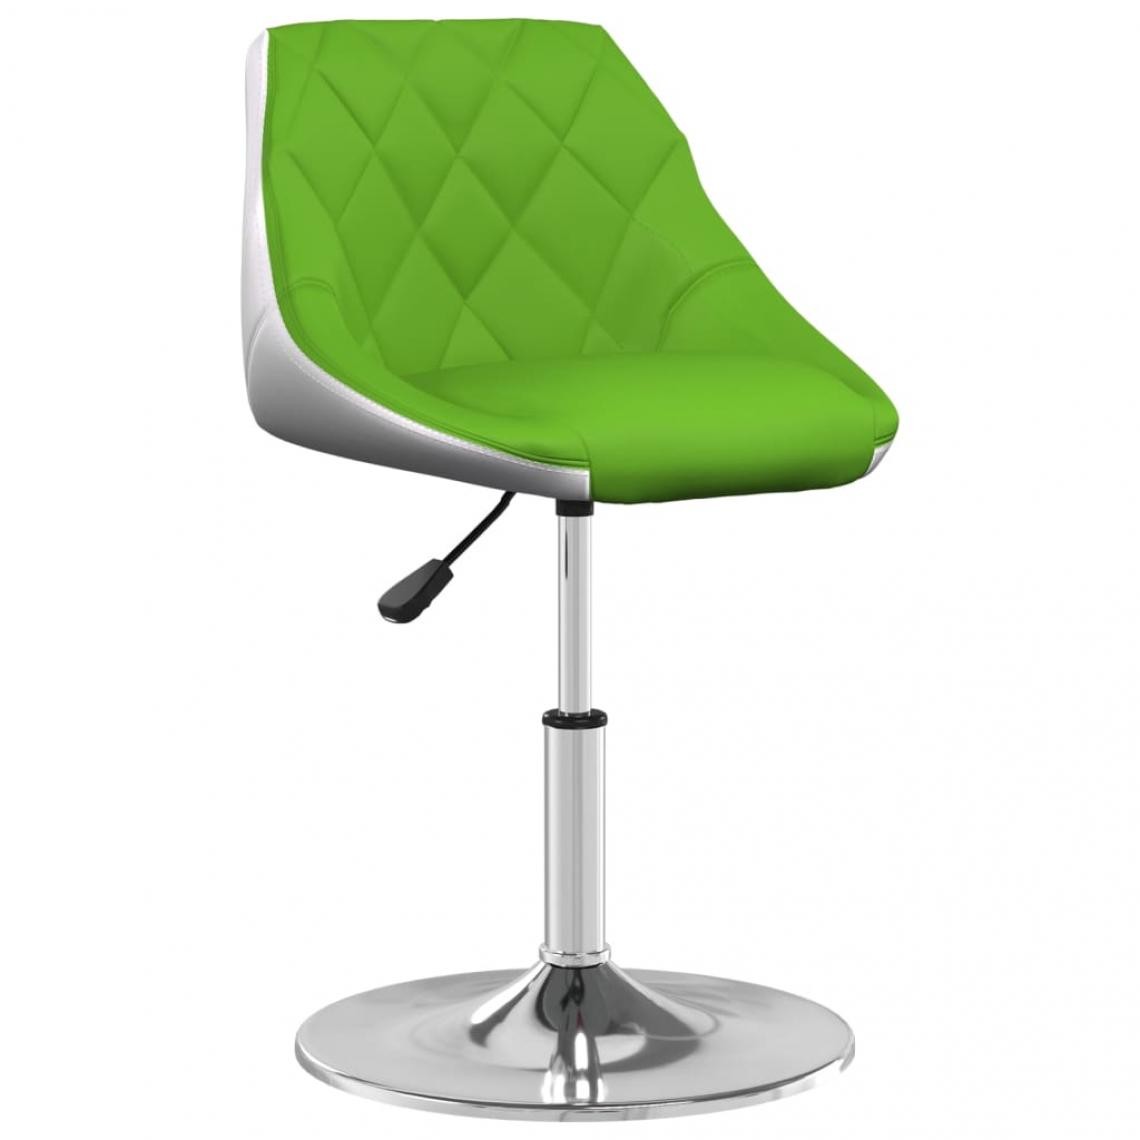 Vidaxl - vidaXL Chaise de salle à manger Vert et blanc Similicuir - Chaises